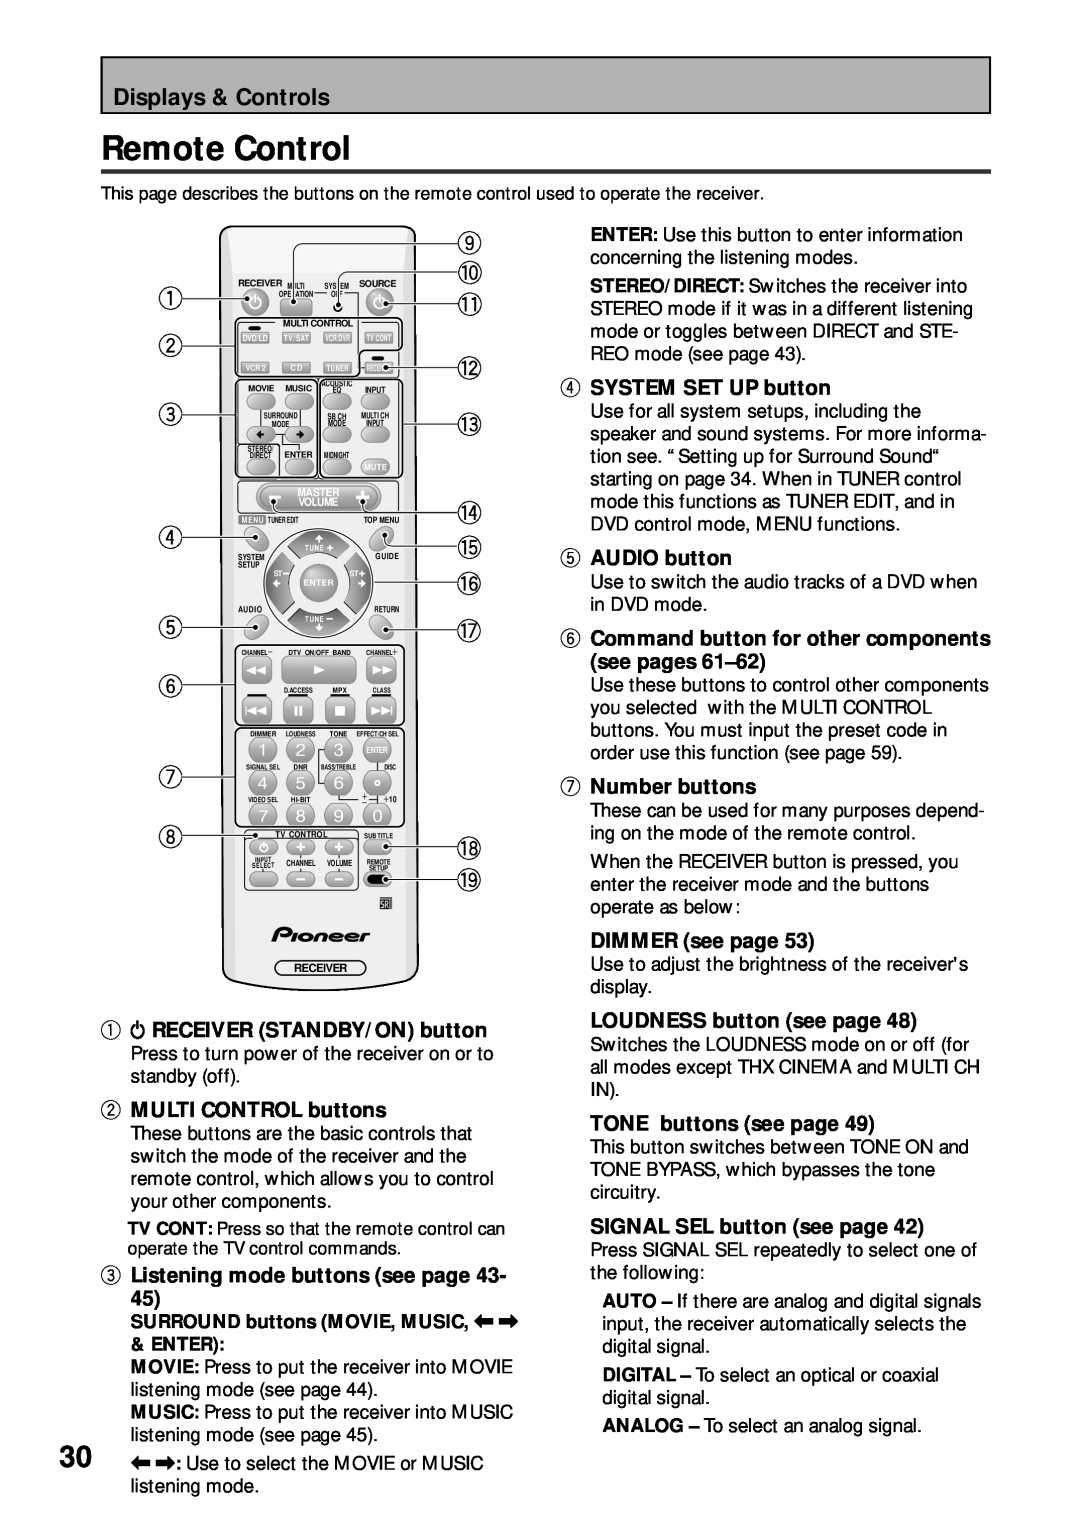 Pioneer VSX-43TX operating instructions Remote Control, 3 4 5 6 7, Displays & Controls 